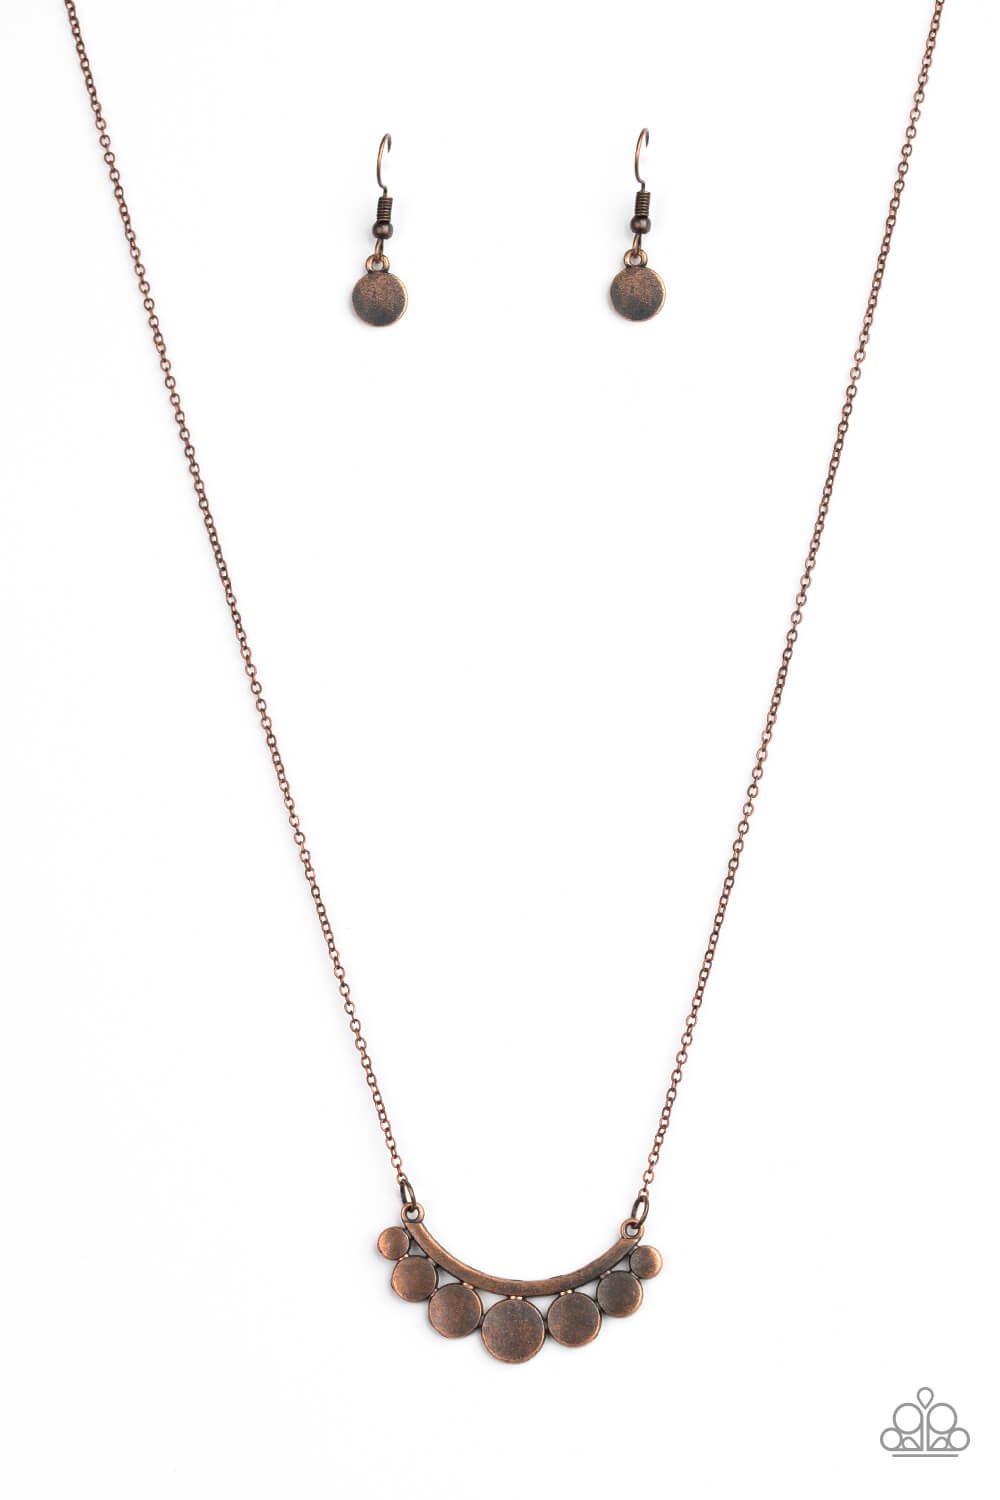 Melodic Metallics - Copper Necklace Set - Princess Glam Shop